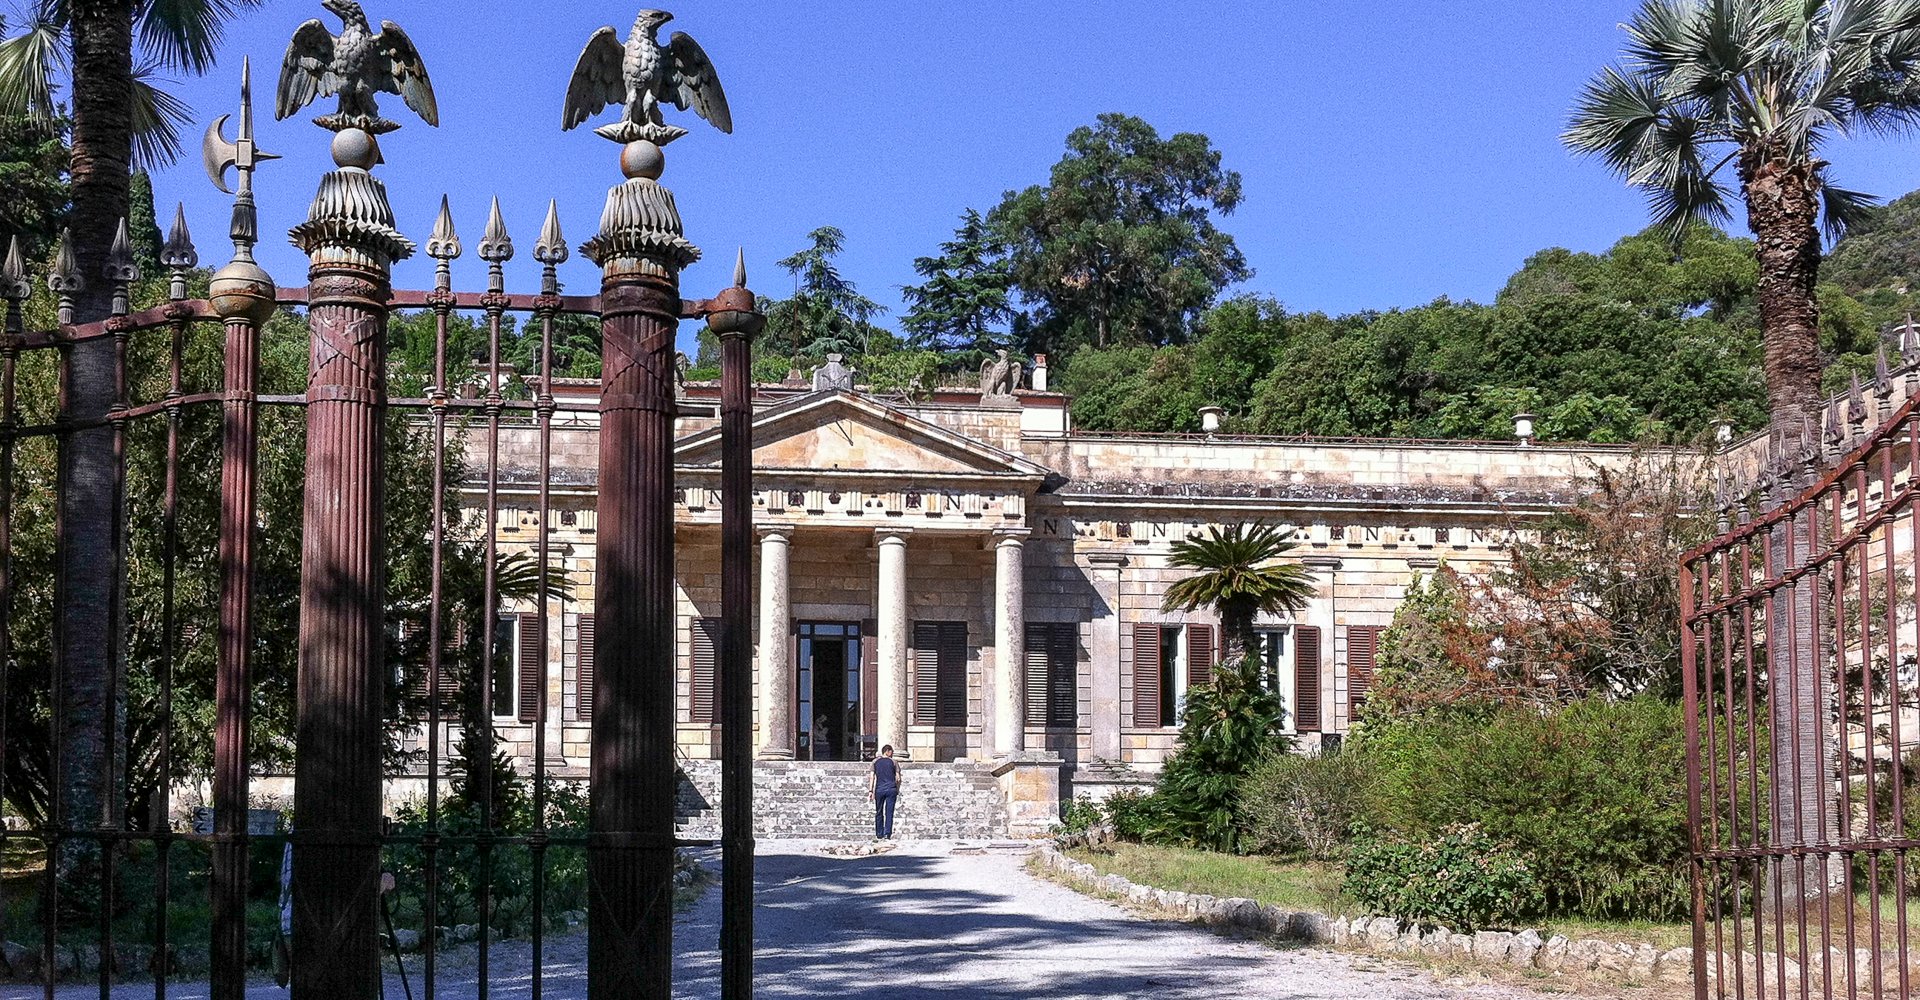 Villa San Martino in Elba island